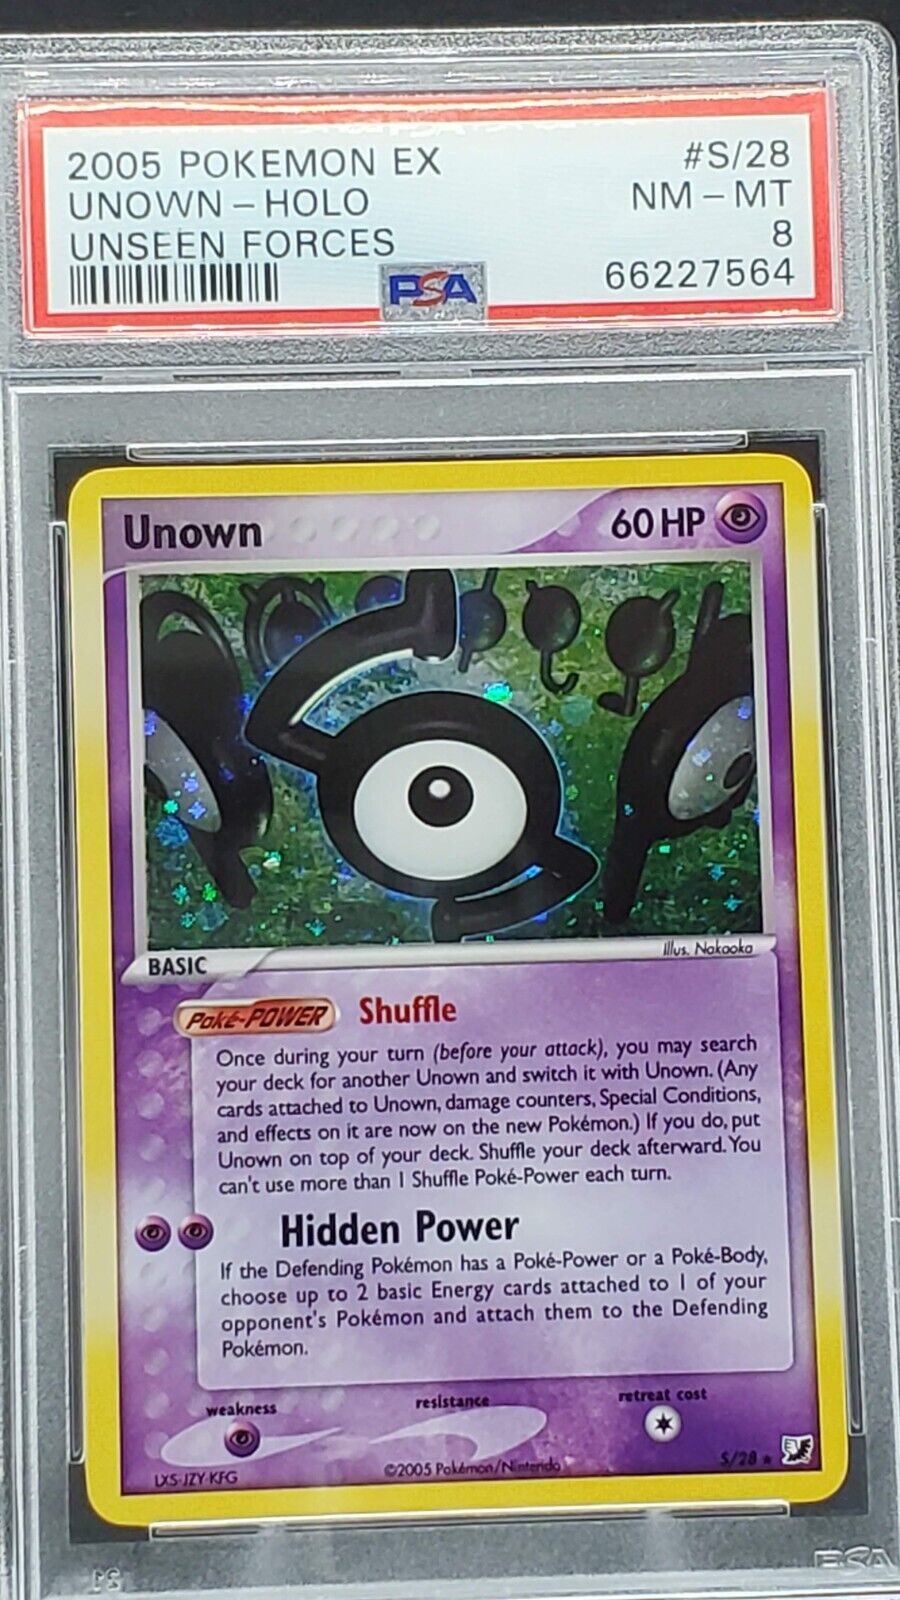 PSA 8 NM-MT Unown ex Unseen Forces Holo Rare Pokemon Card S/28 - Image 1